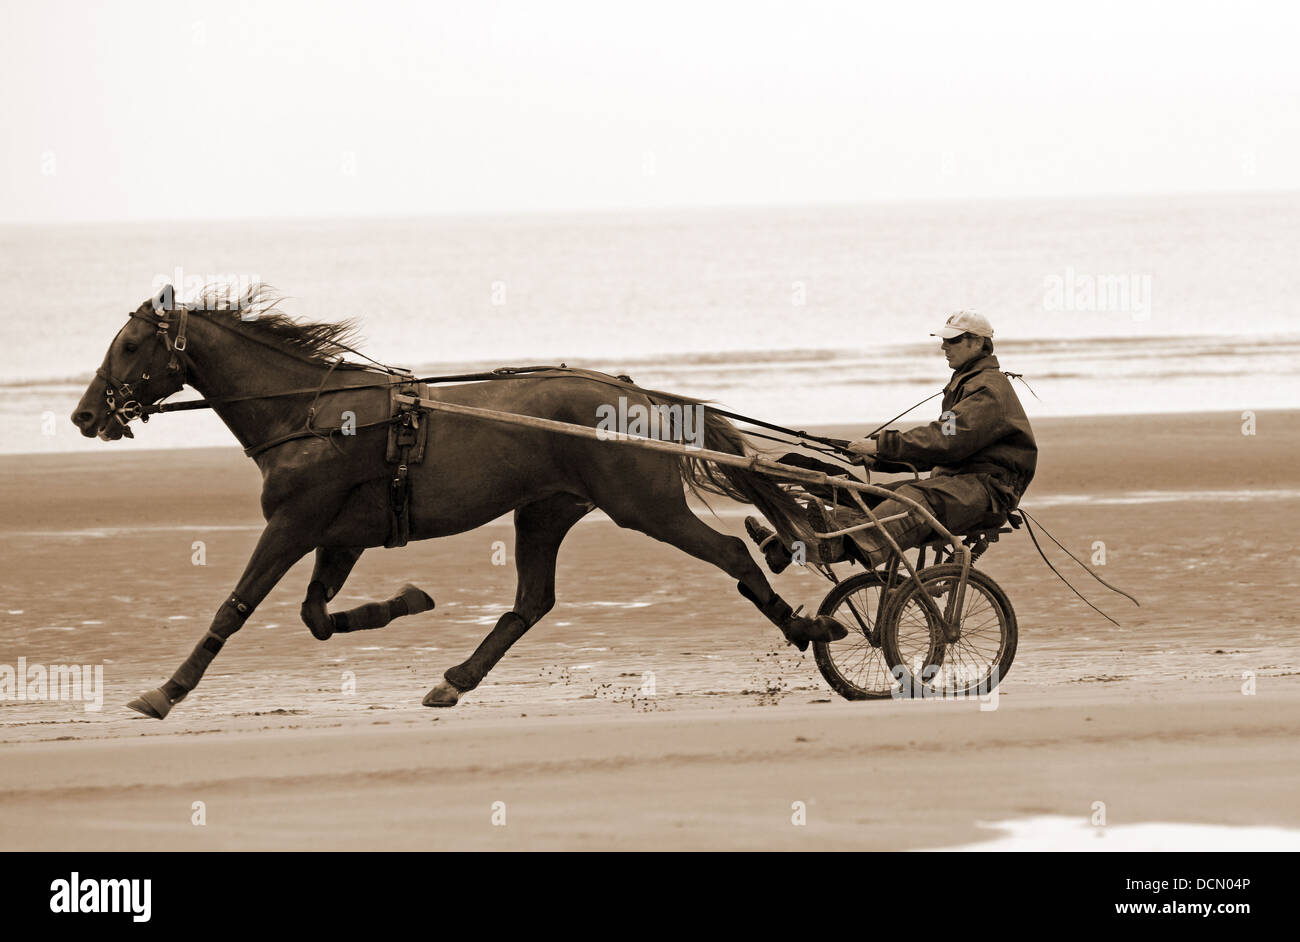 Harness racing, Sulky Racing, Horse Gig Racing, on the beach. Gypsy horses Stock Photo